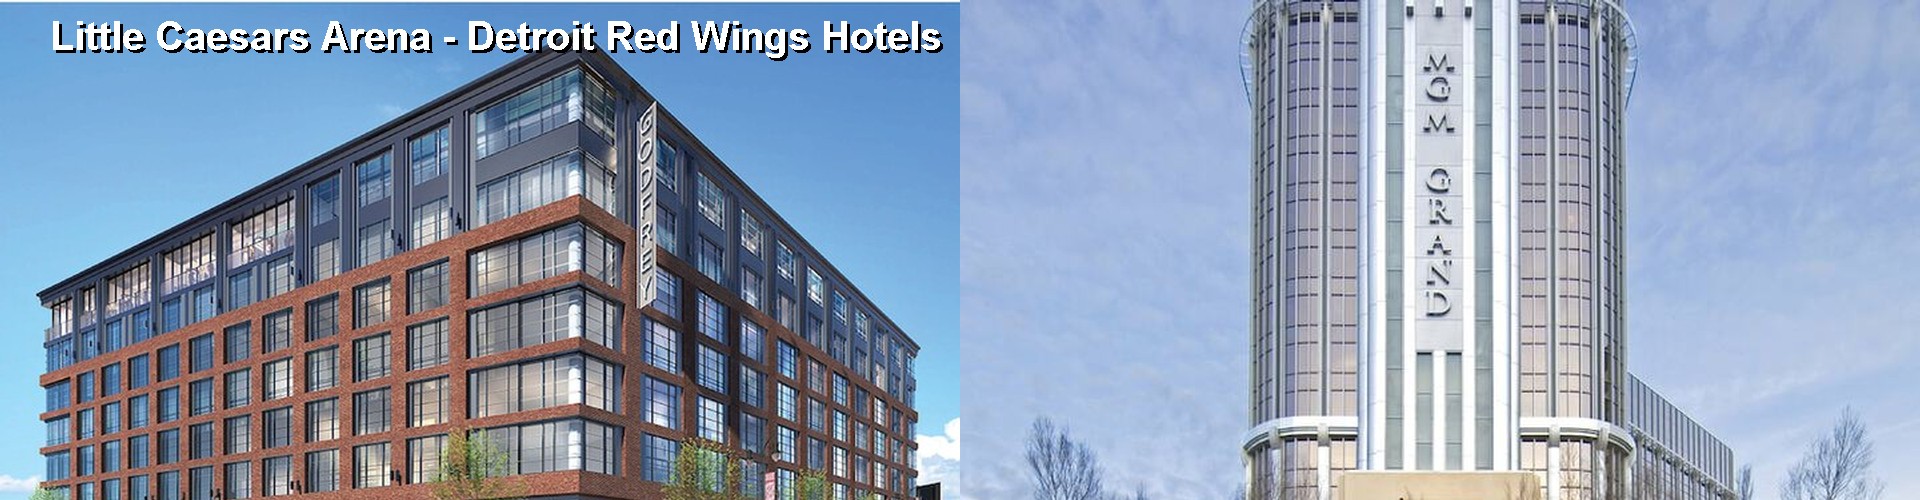 5 Best Hotels near Little Caesars Arena - Detroit Red Wings